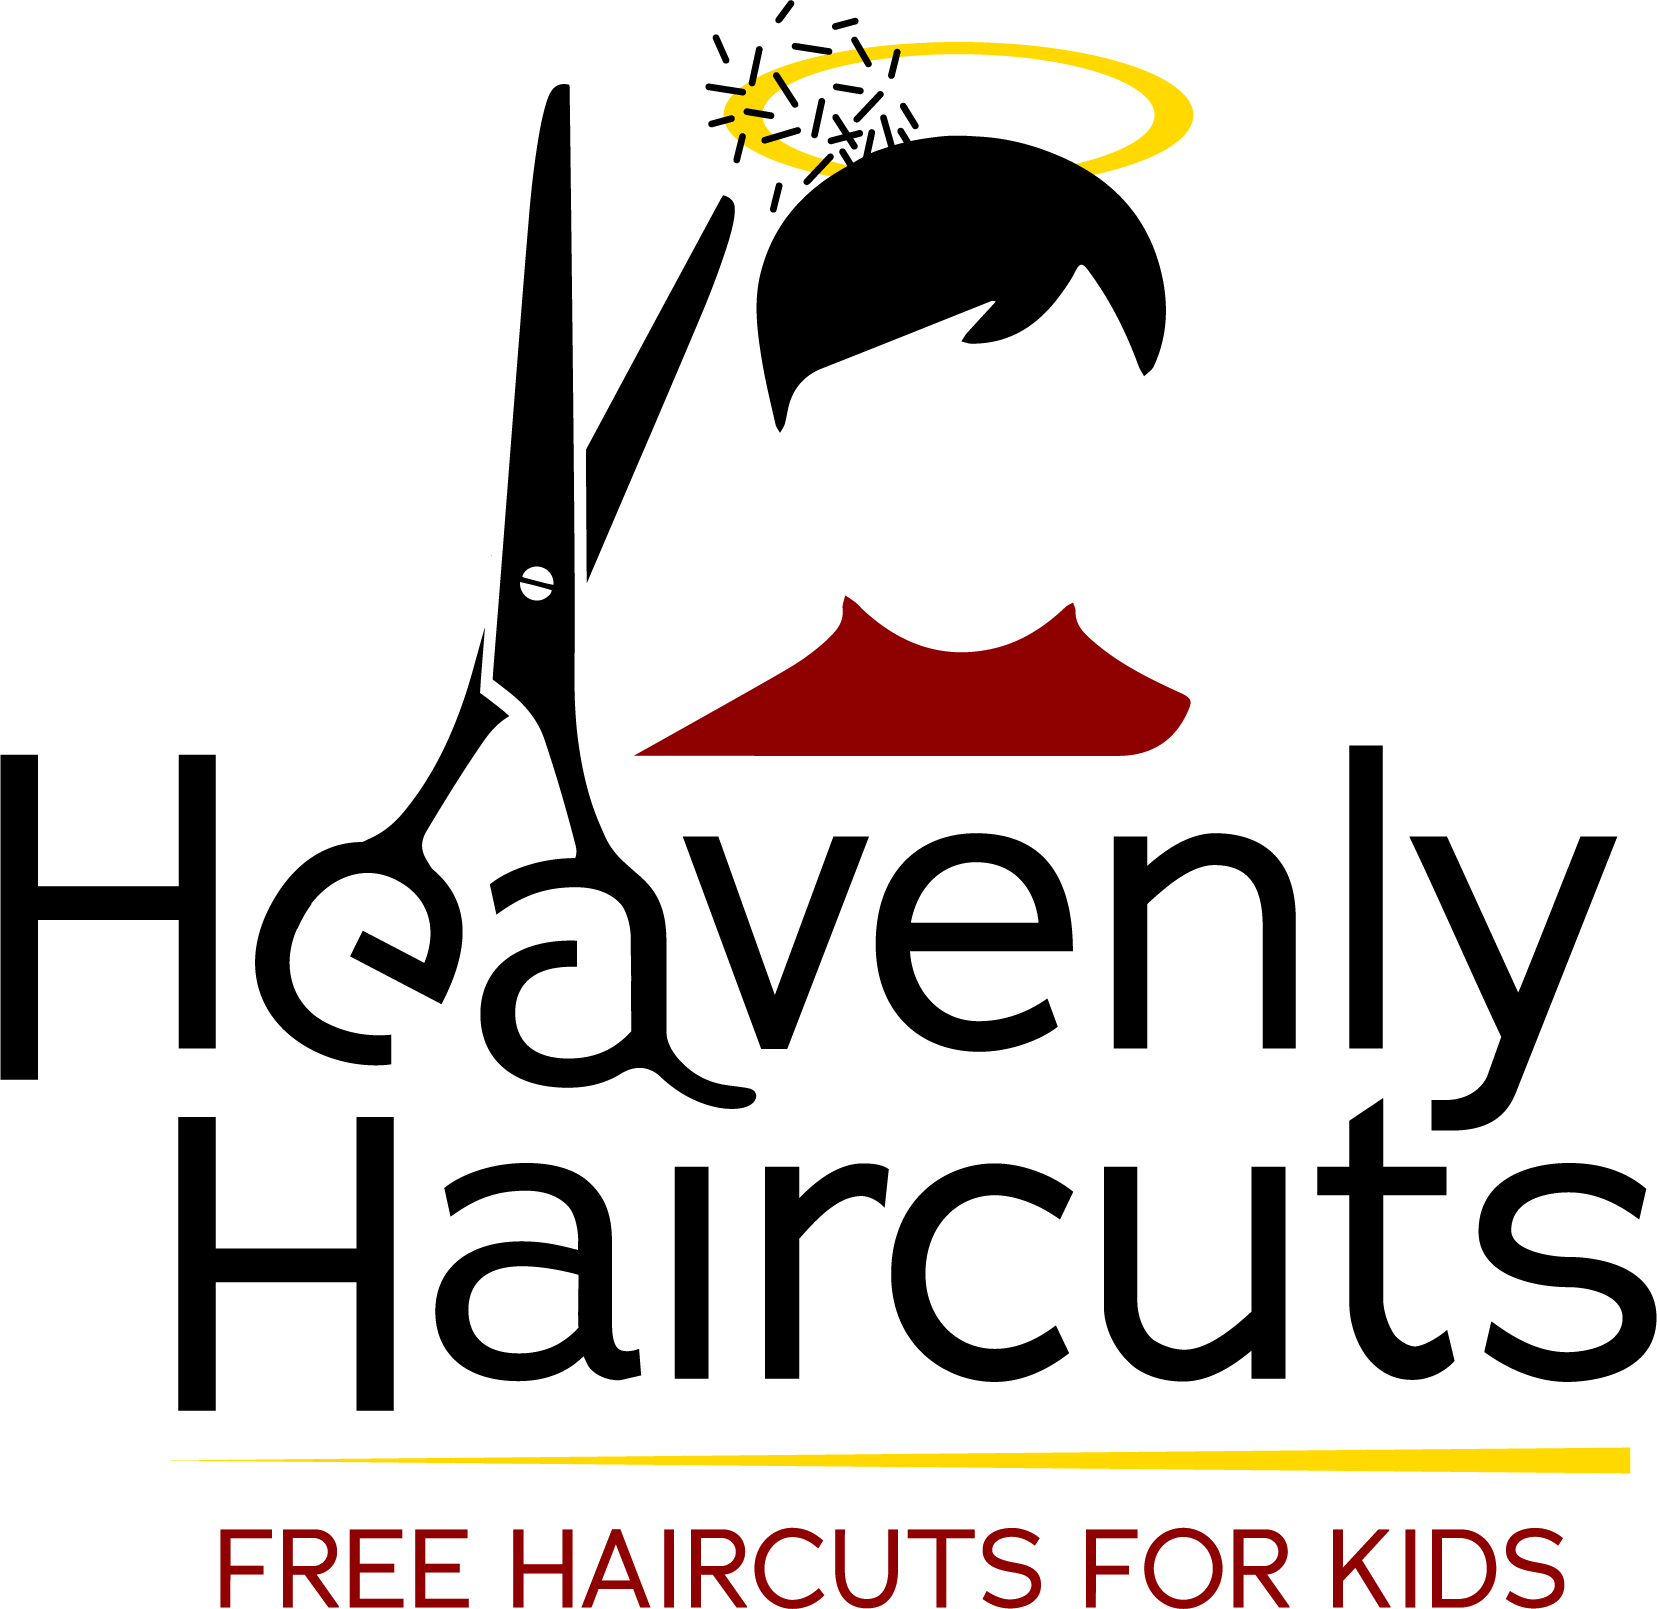 Heavenly Haircuts